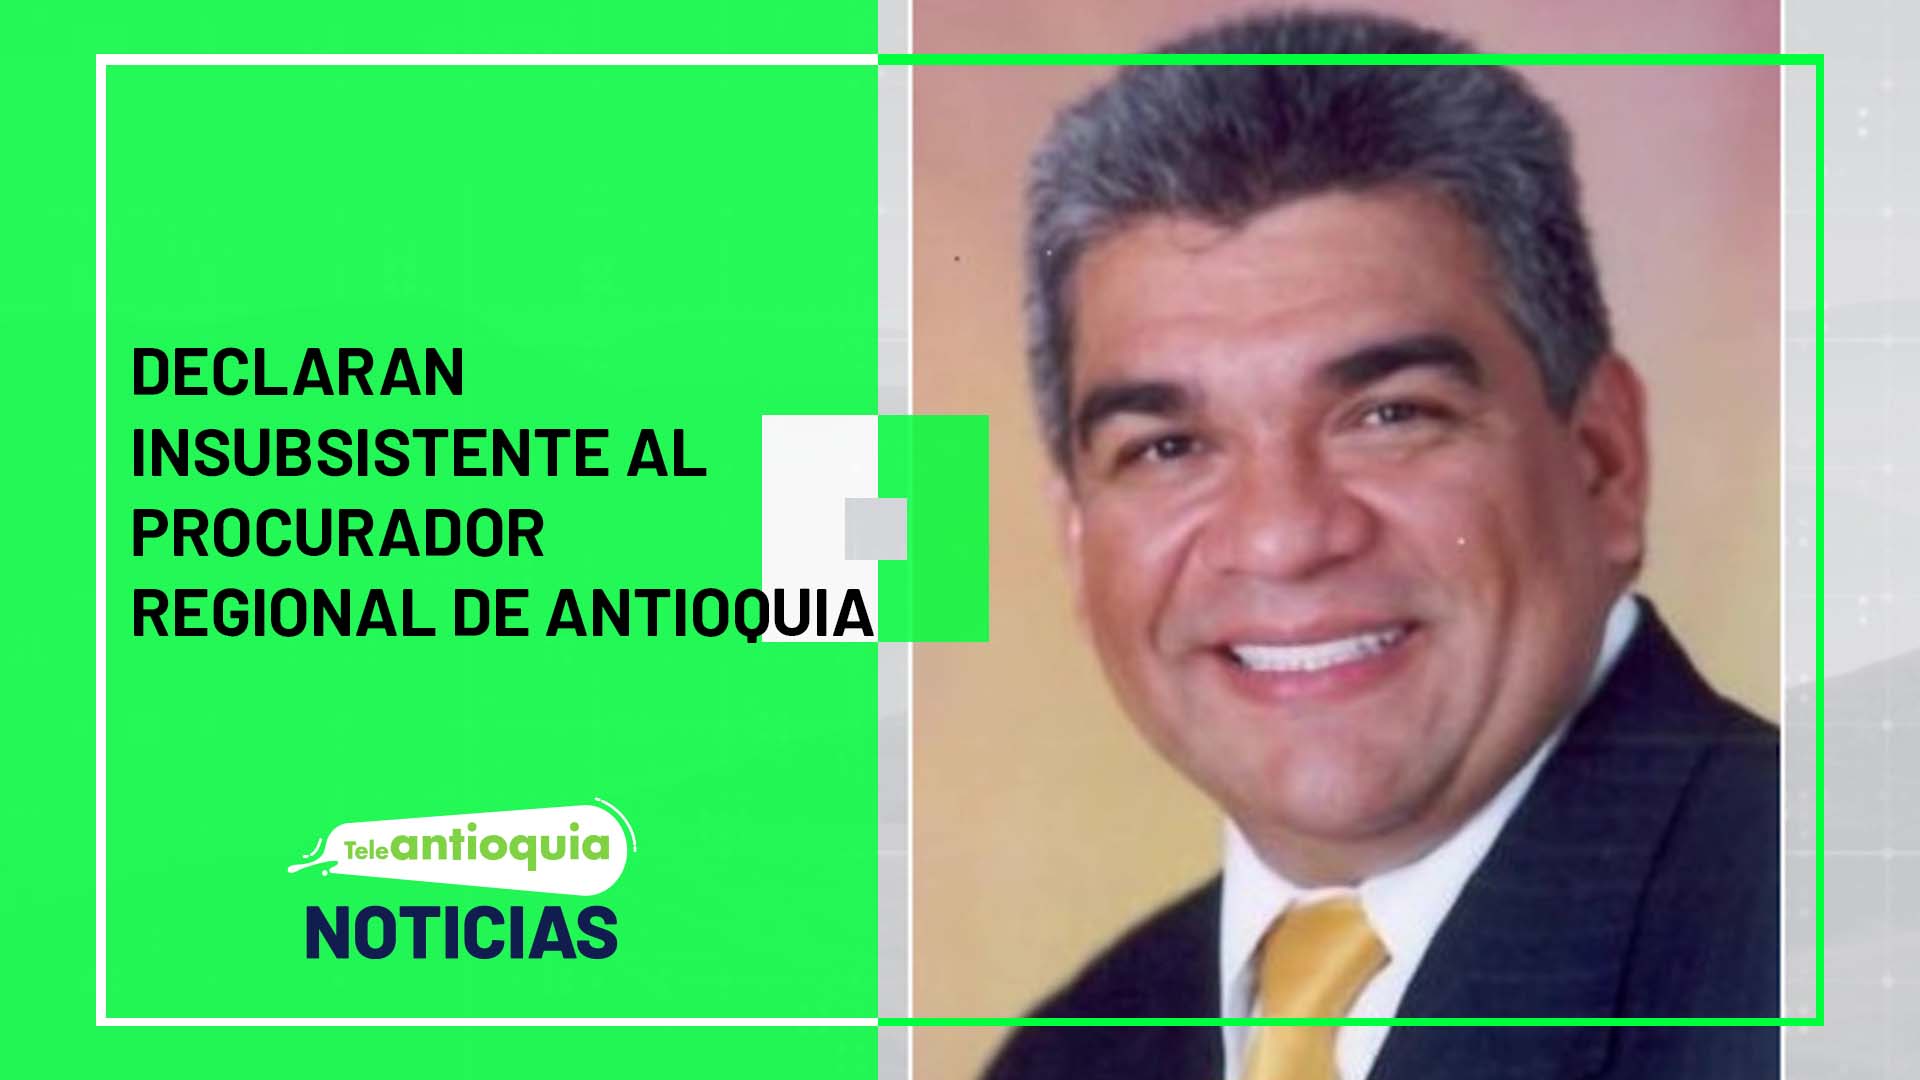 Declaran insubsistente al procurador regional de Antioquia